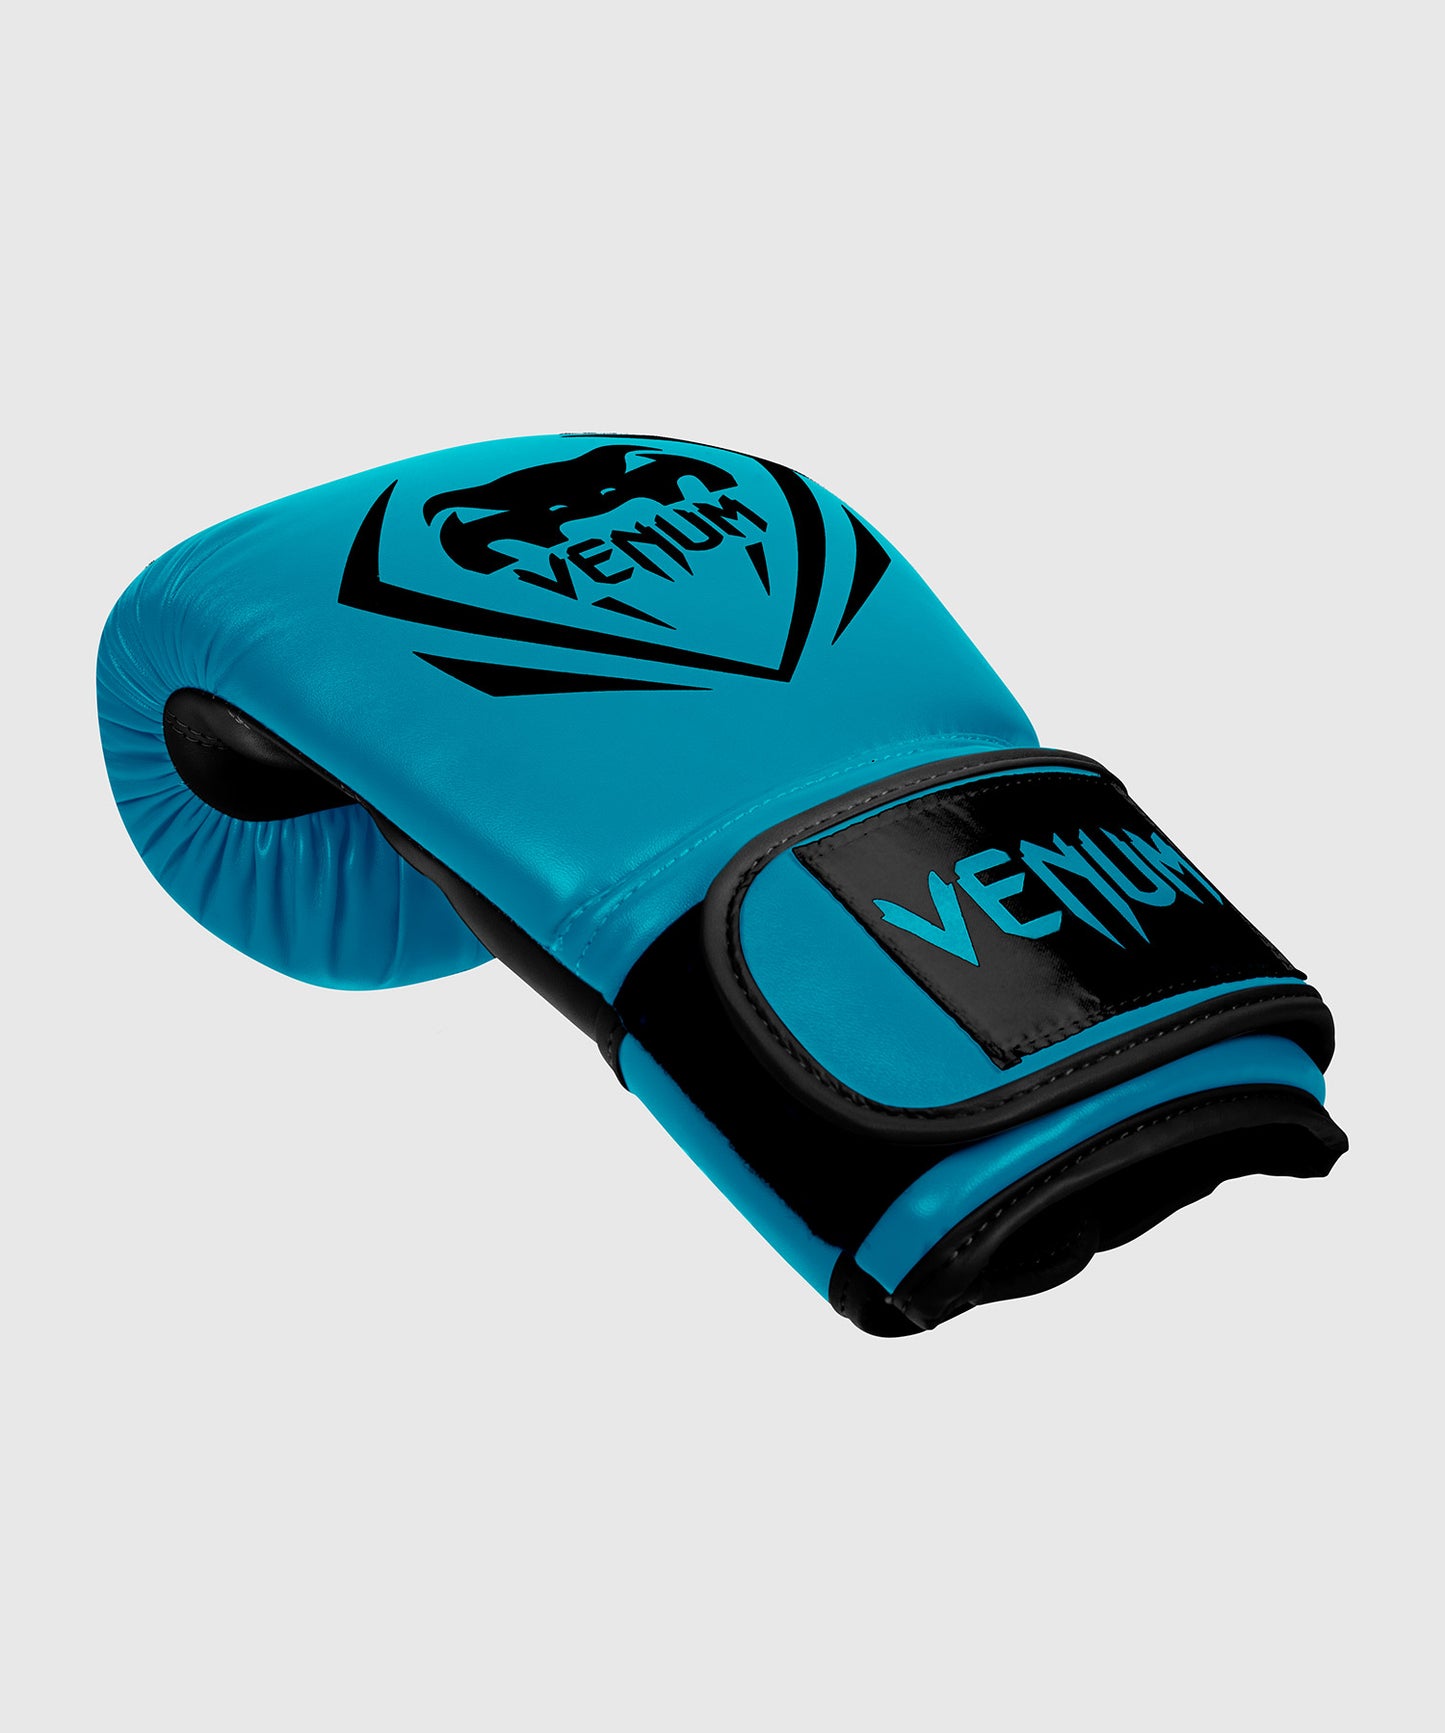 Guantes de Boxeo Venum Contender - Azul